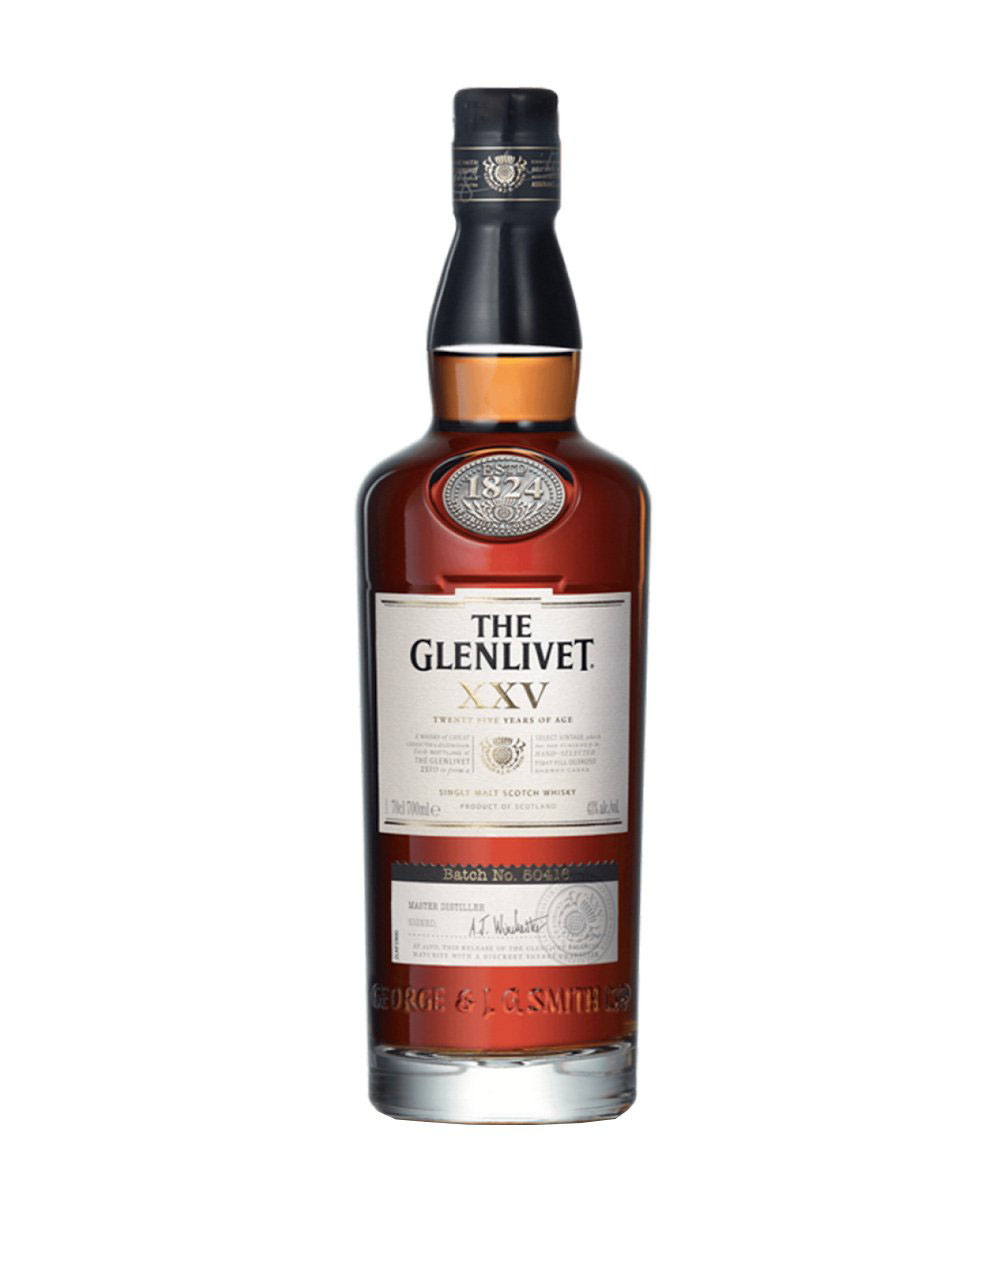 The Glenlivet 25 Year Old XXV Scotch Whisky